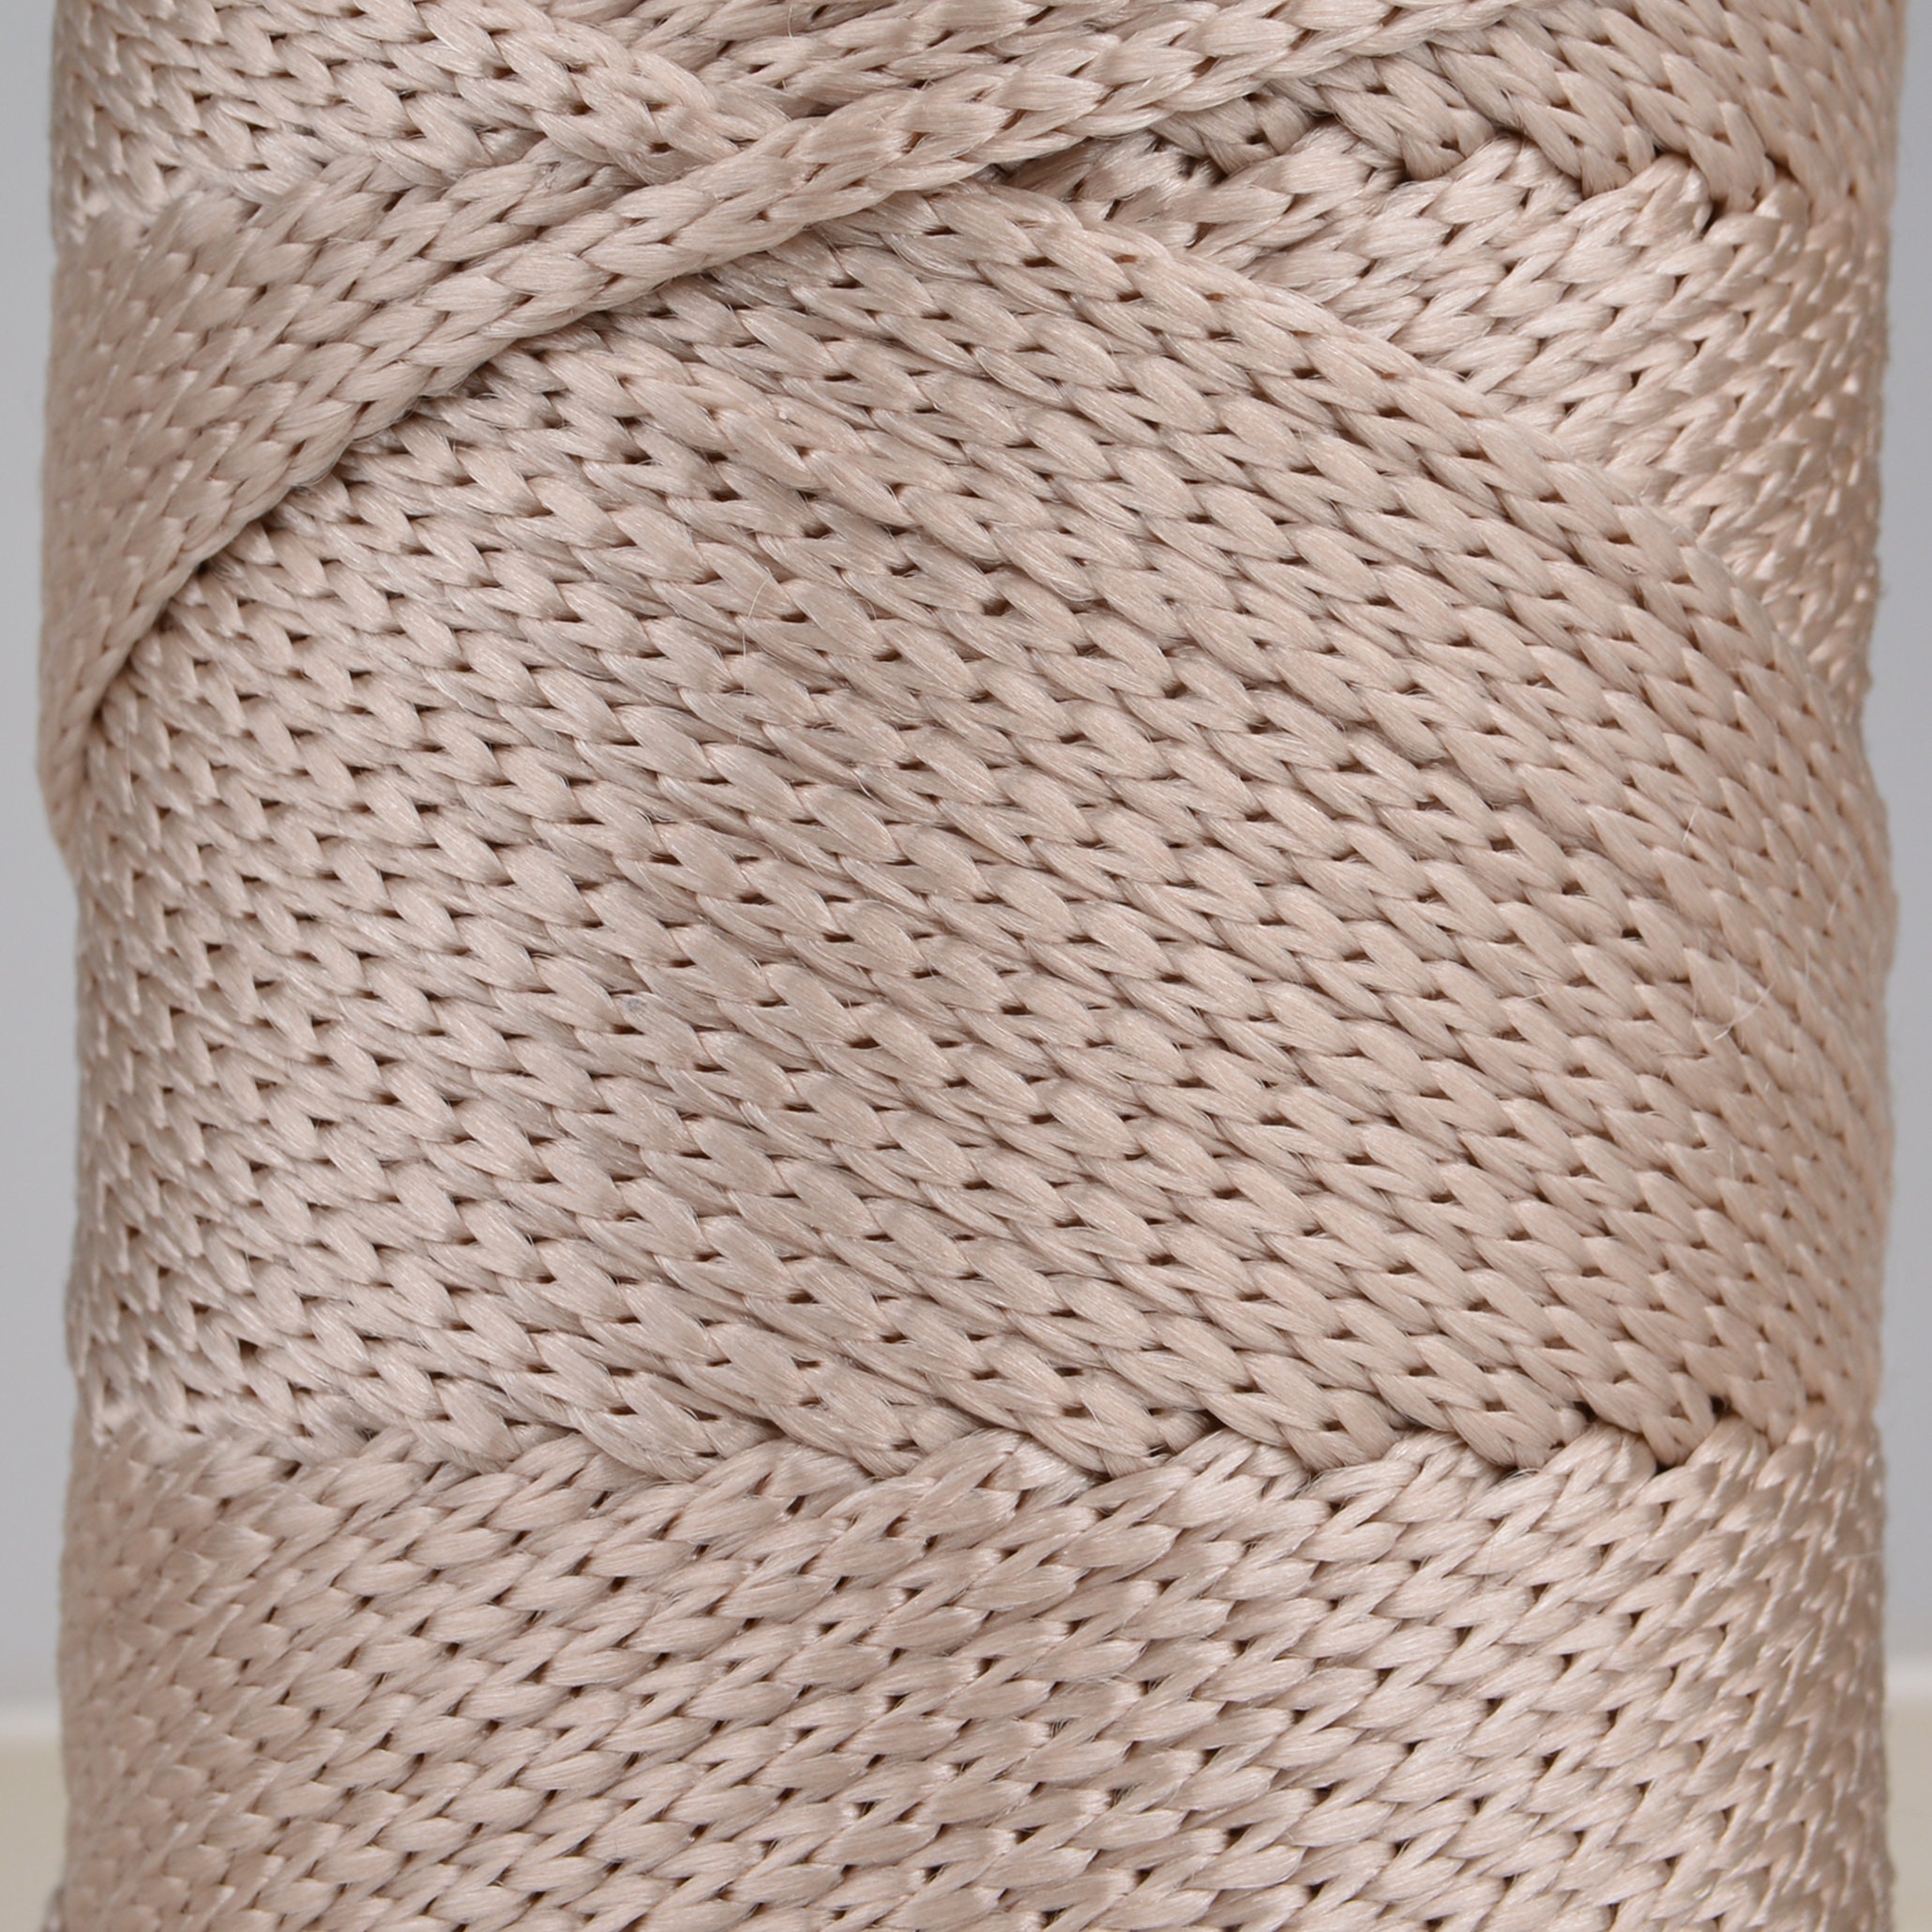 Sensy Premium 5mm 104 Yards Polyester Rope 100% Polypropylene Cord Macrame Cord 5mm Crochet Bag Cord Macrame Rope Crochet Thread Gift for Knitter